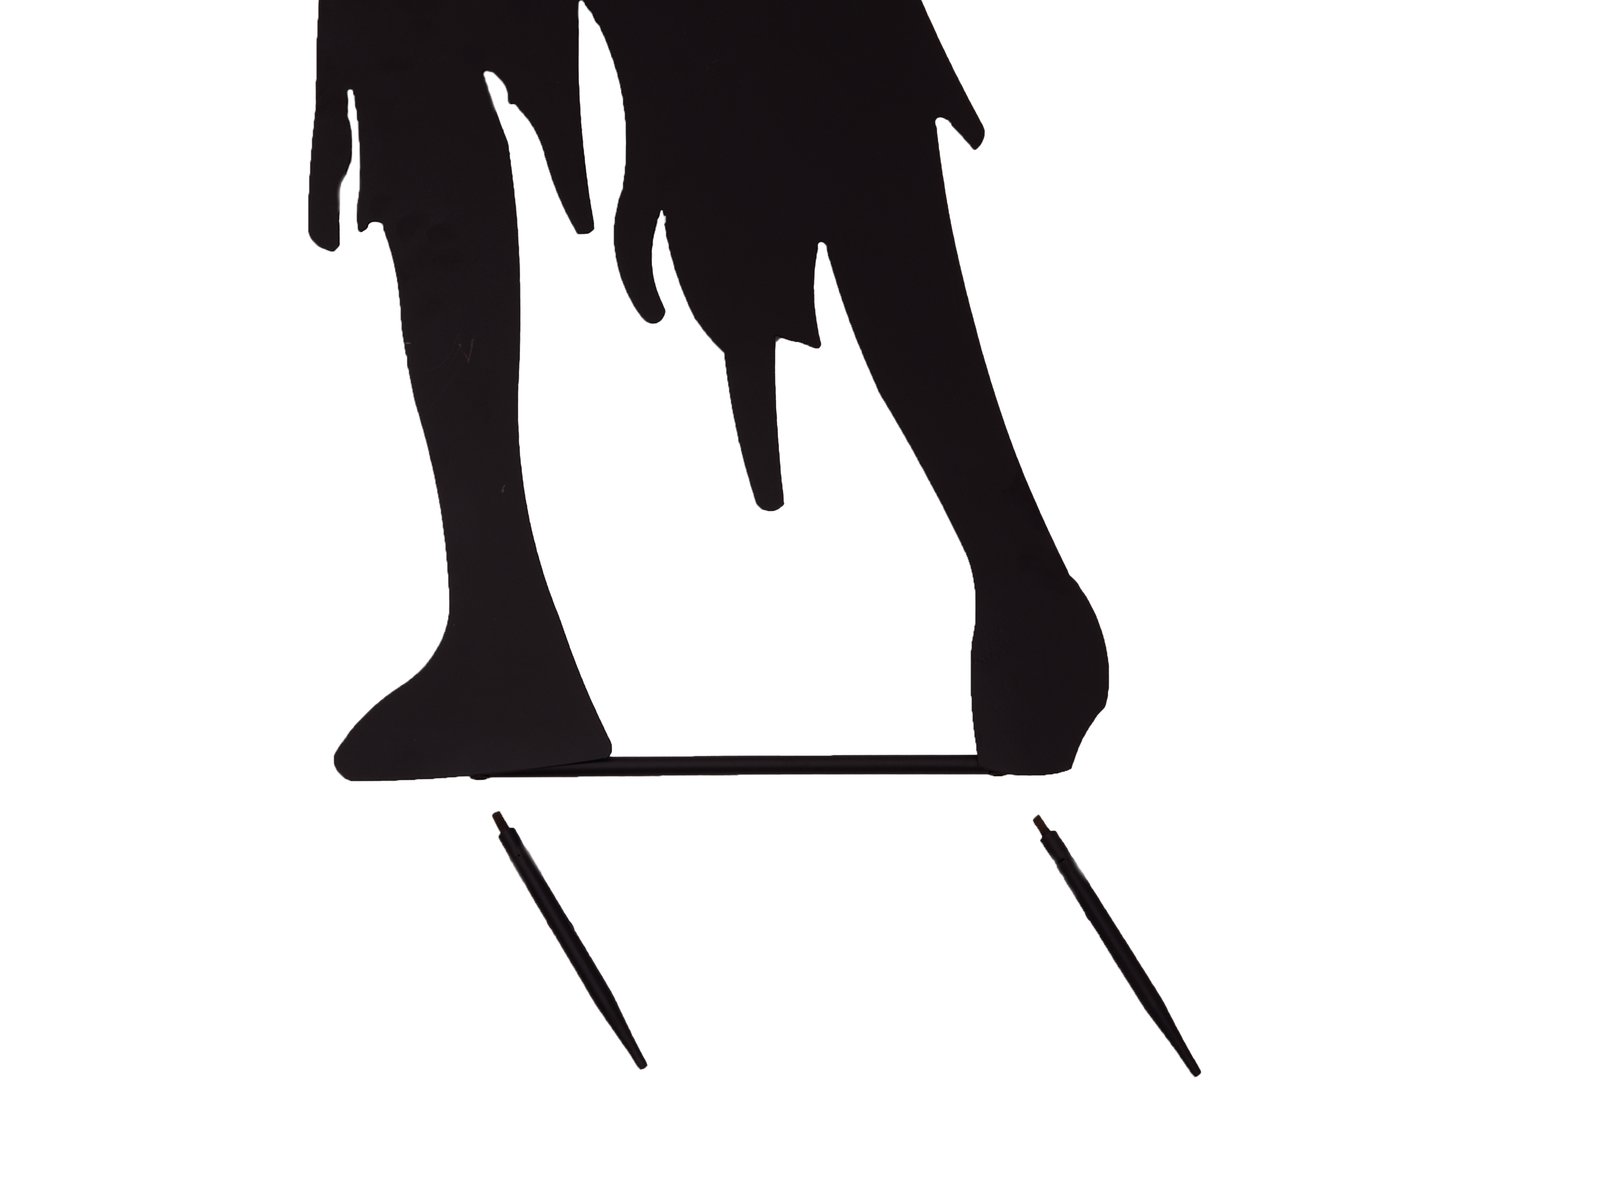 EUROPALMS Silhouette Metal Zombie Woman, 135cm